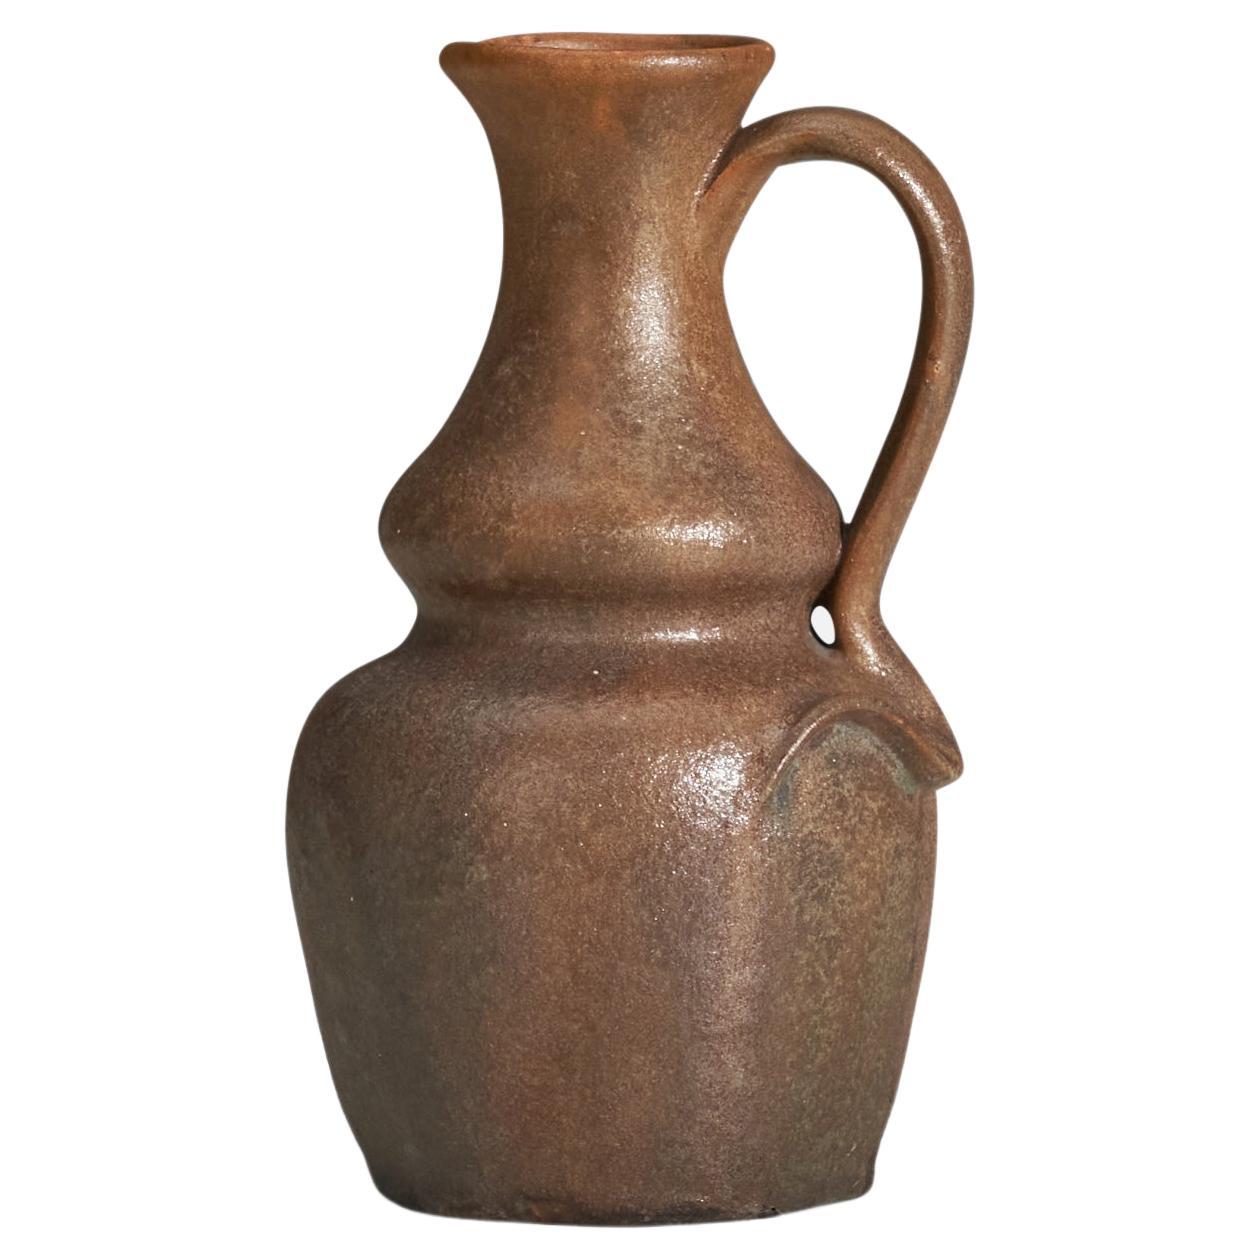 Höganas Keramik, Pitcher, Brown Glazed Earthenware, Sweden, 1920s